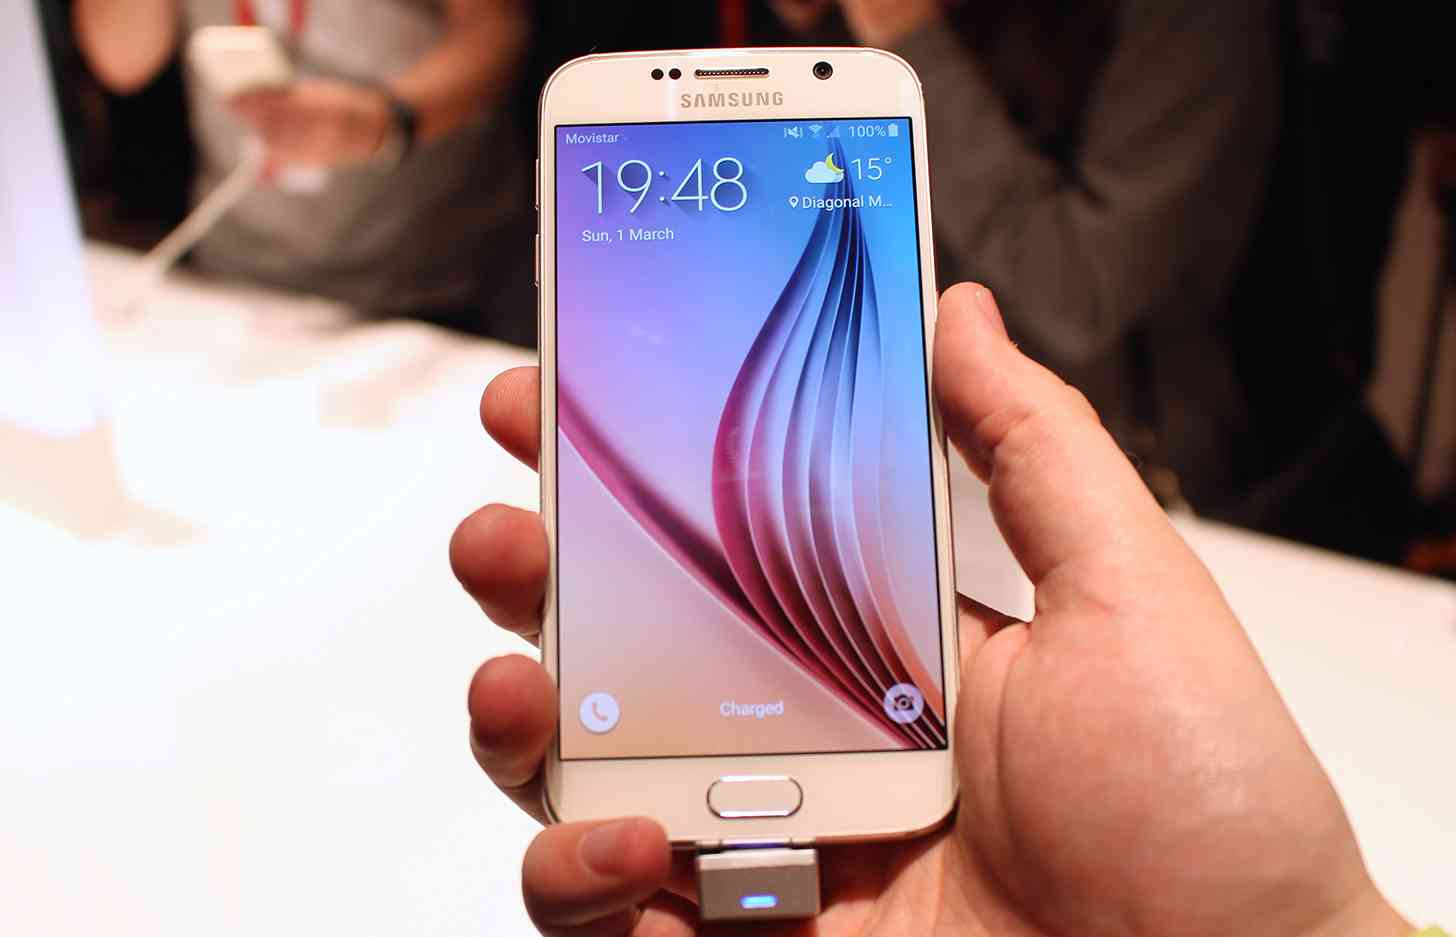 Samsung Galaxy S6 hands on